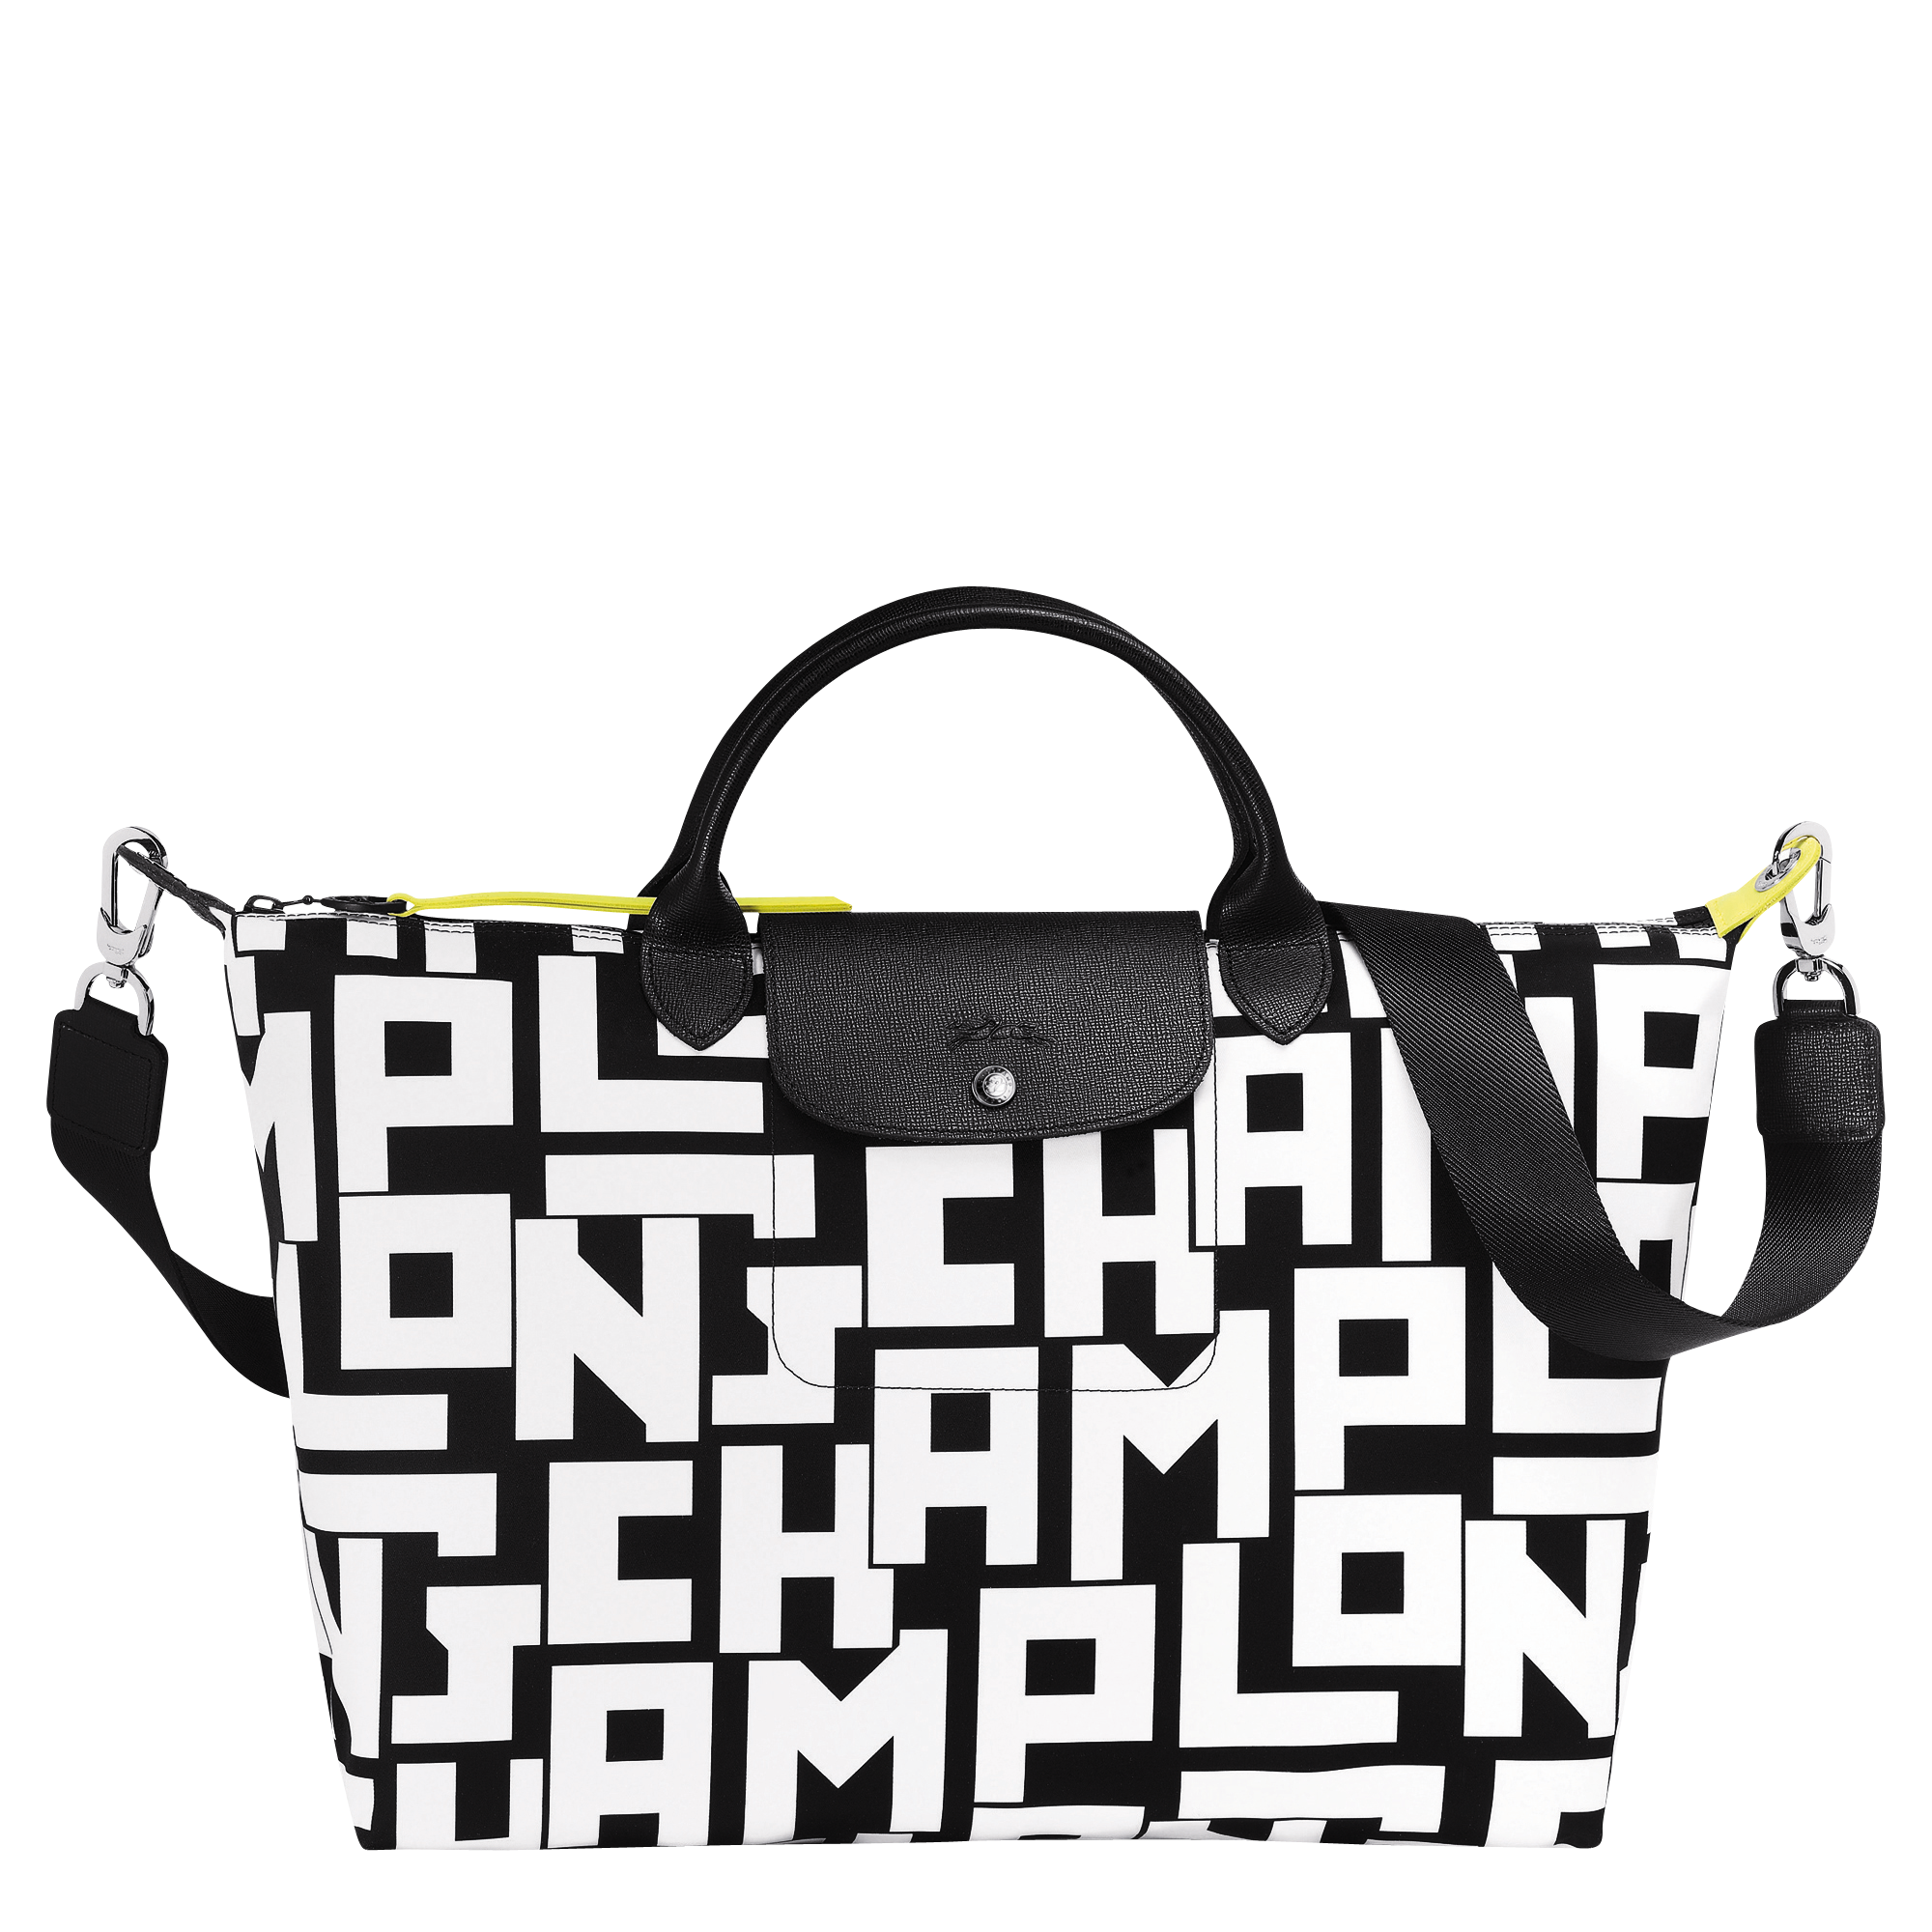 longchamp black and white bag